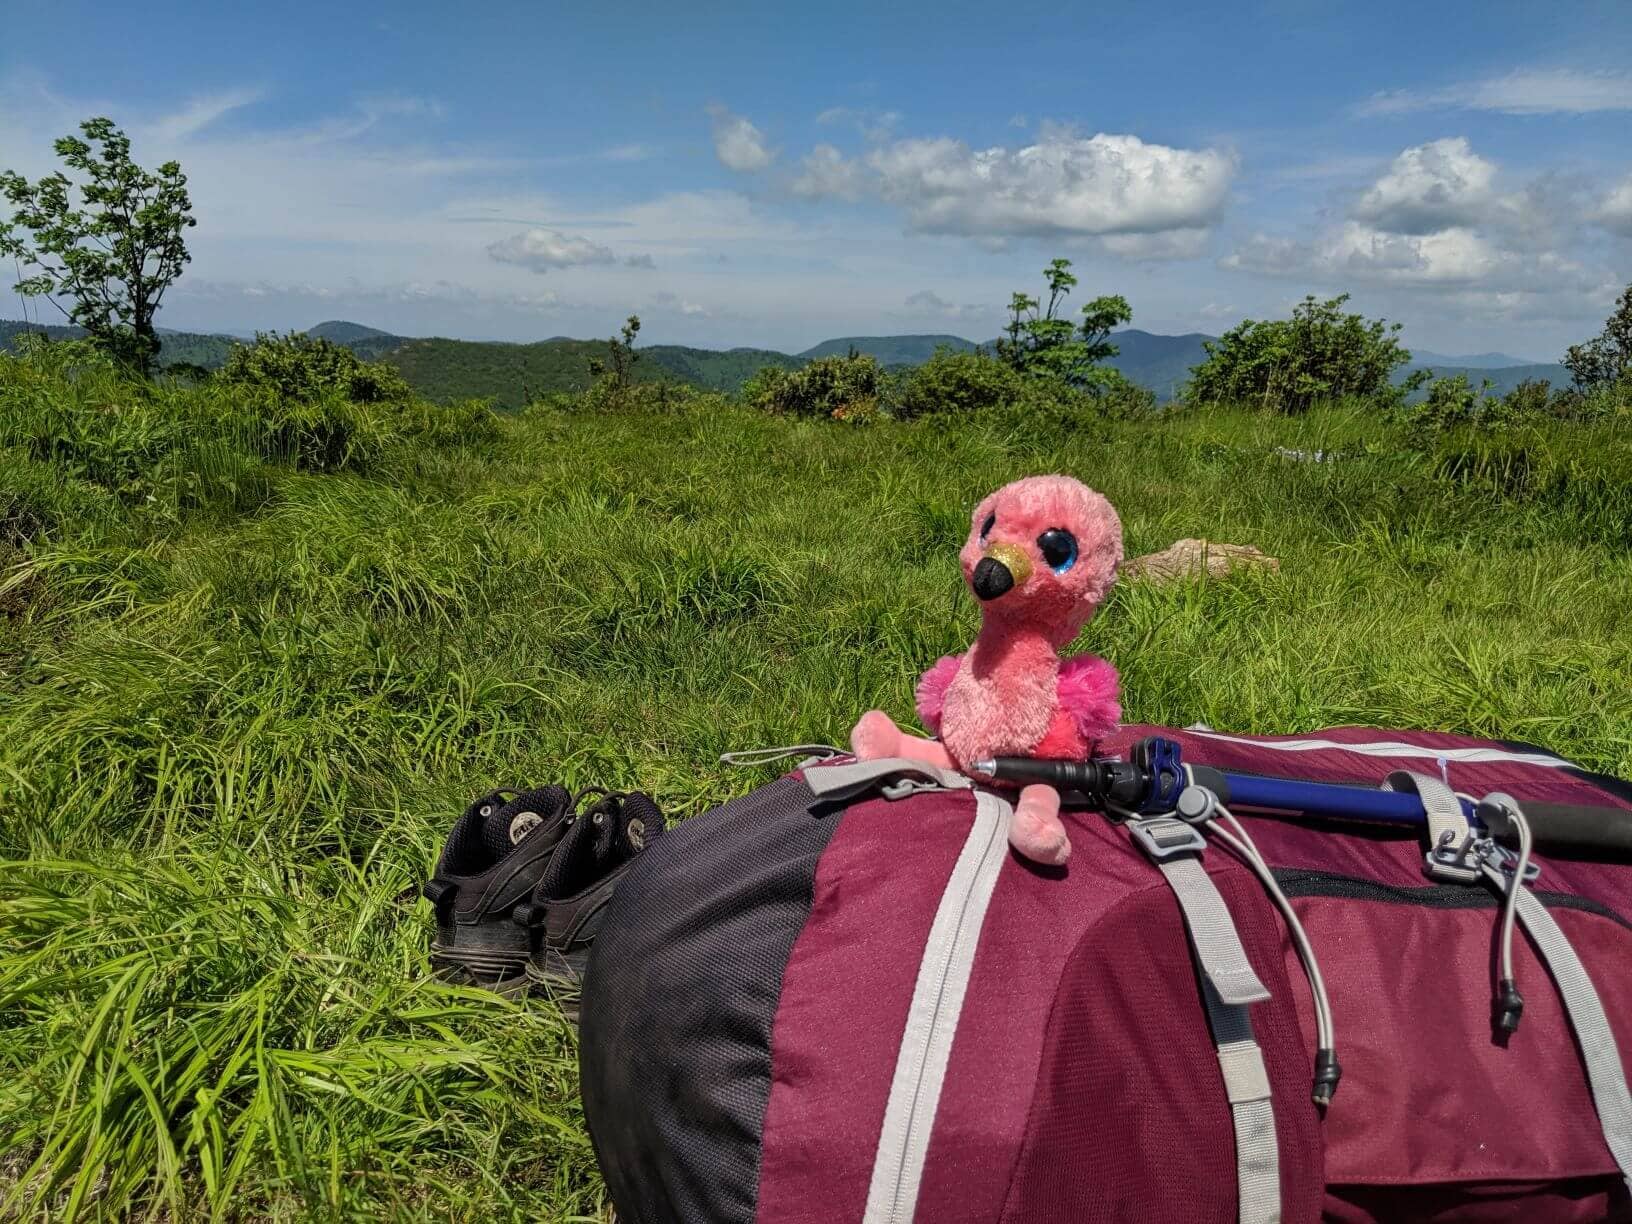 pink flamingo is definitely useful backpacking gear